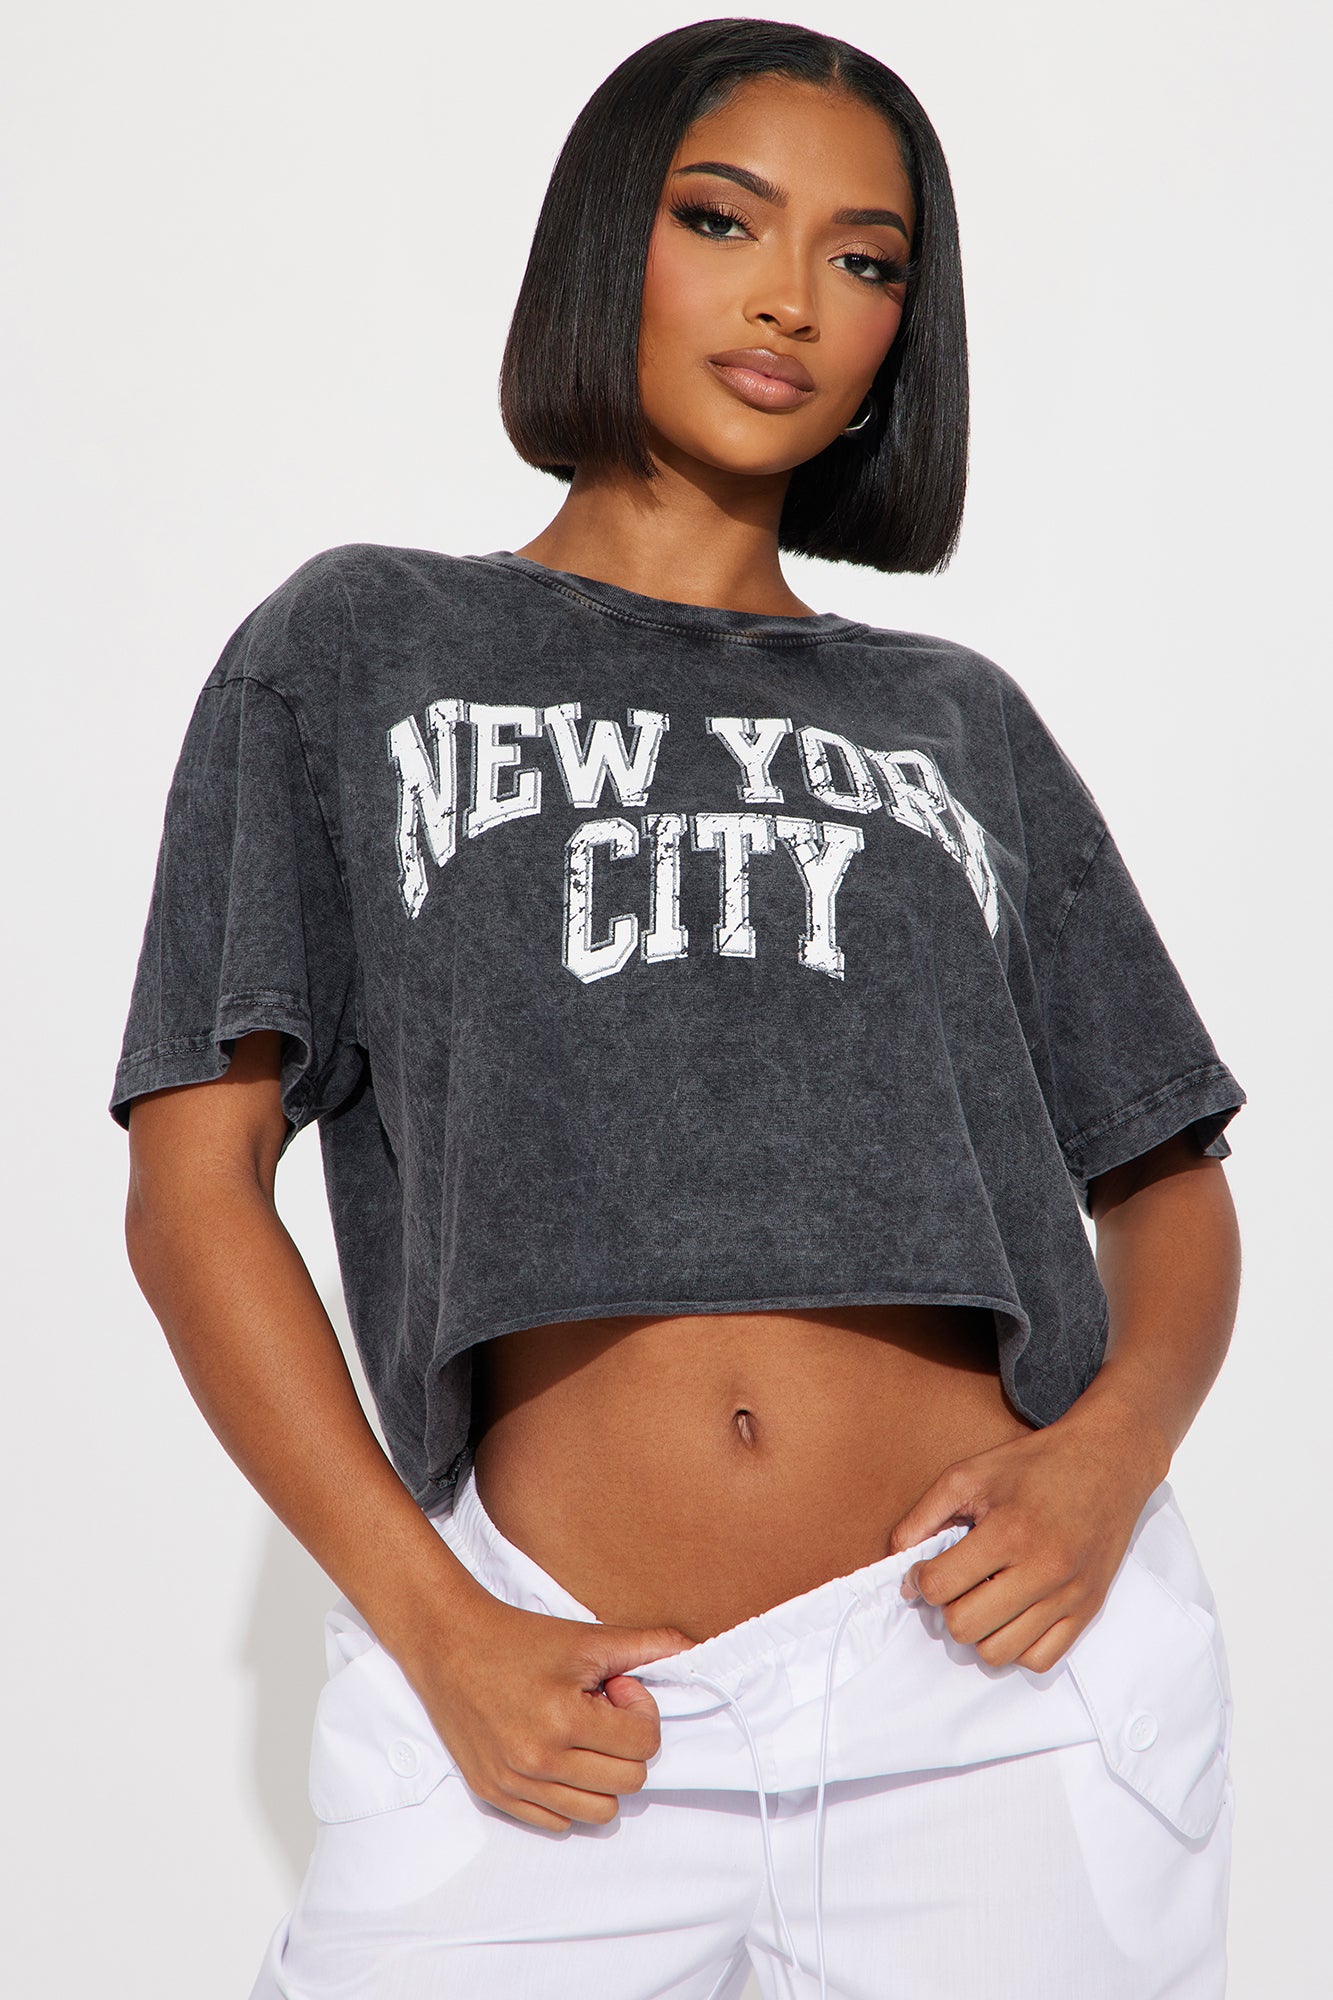 New York City Crop Tee - Black, Fashion Nova, Screens Tops and Bottoms